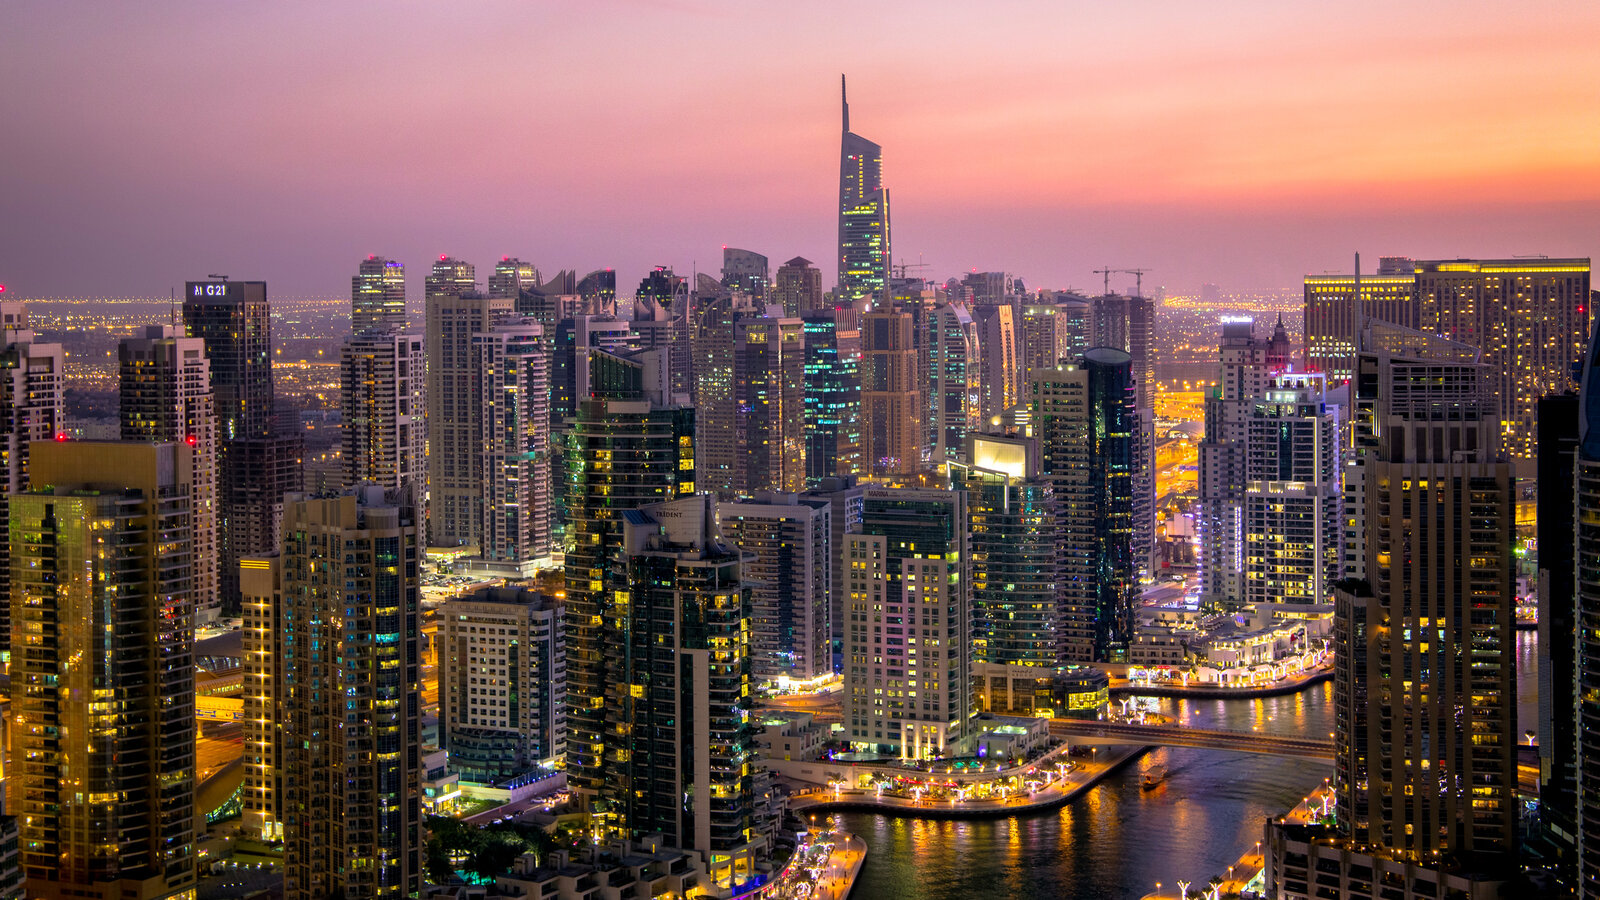 Dubai Real Estate Market: What’s Going On?